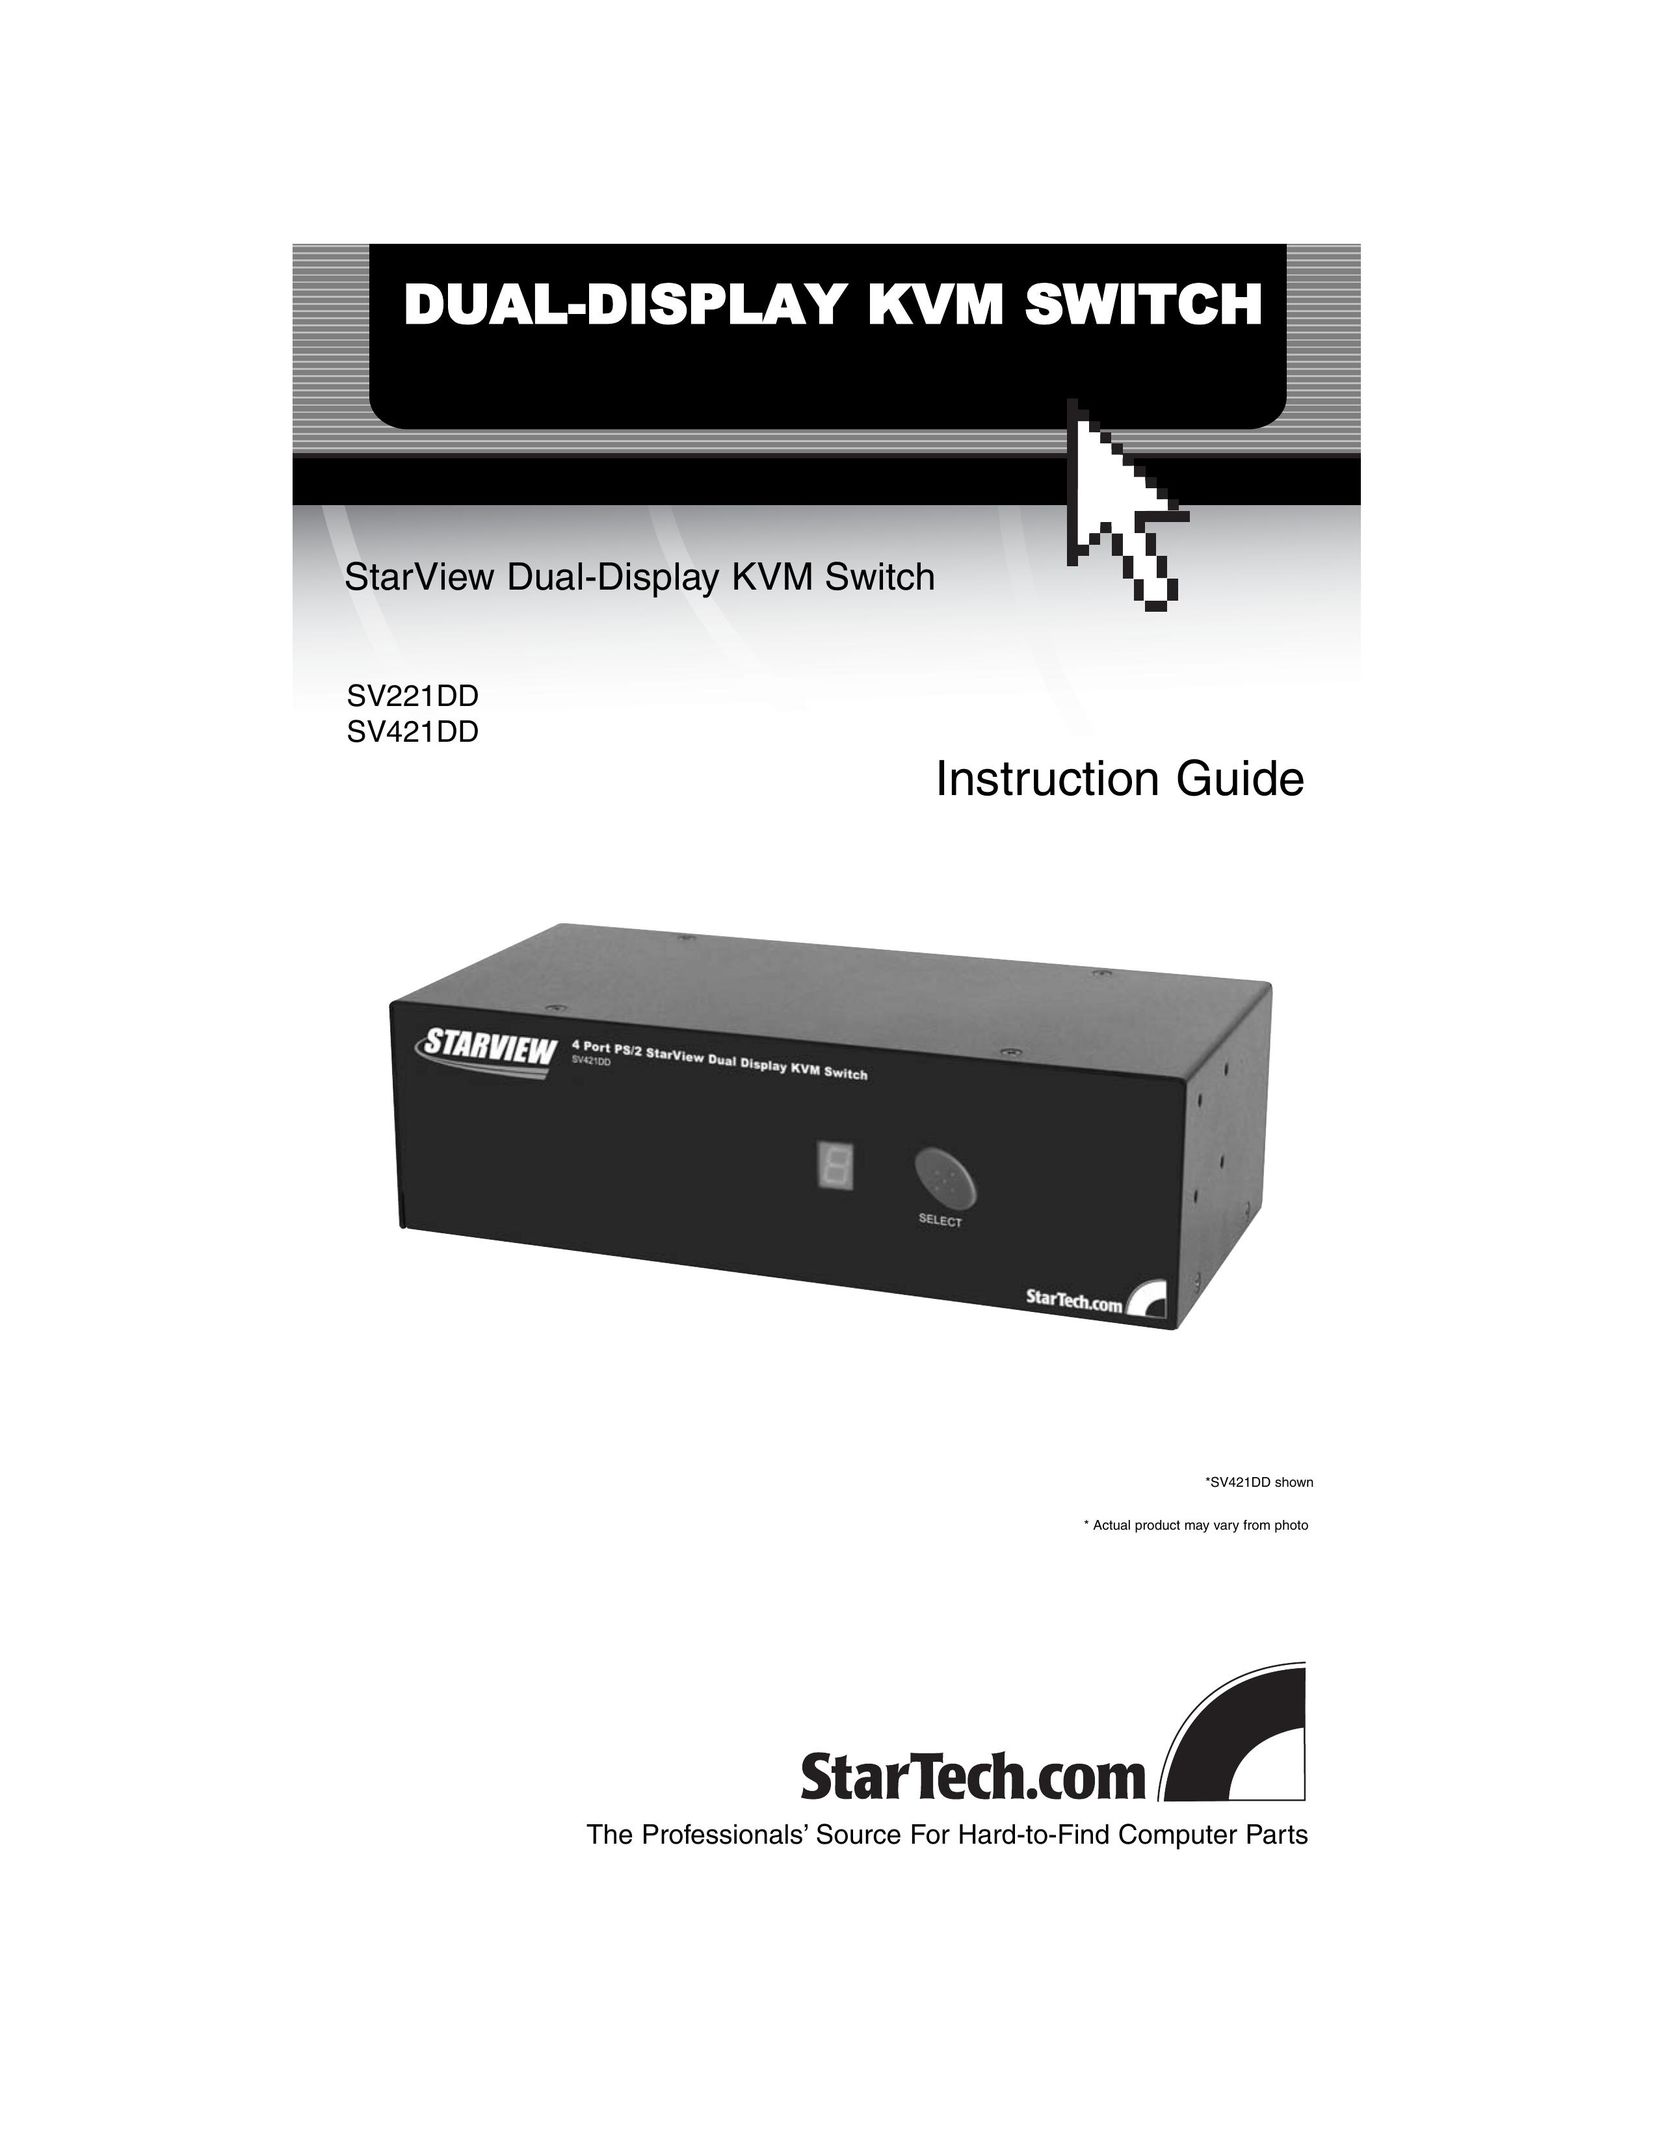 StarTech.com SV221DD Switch User Manual